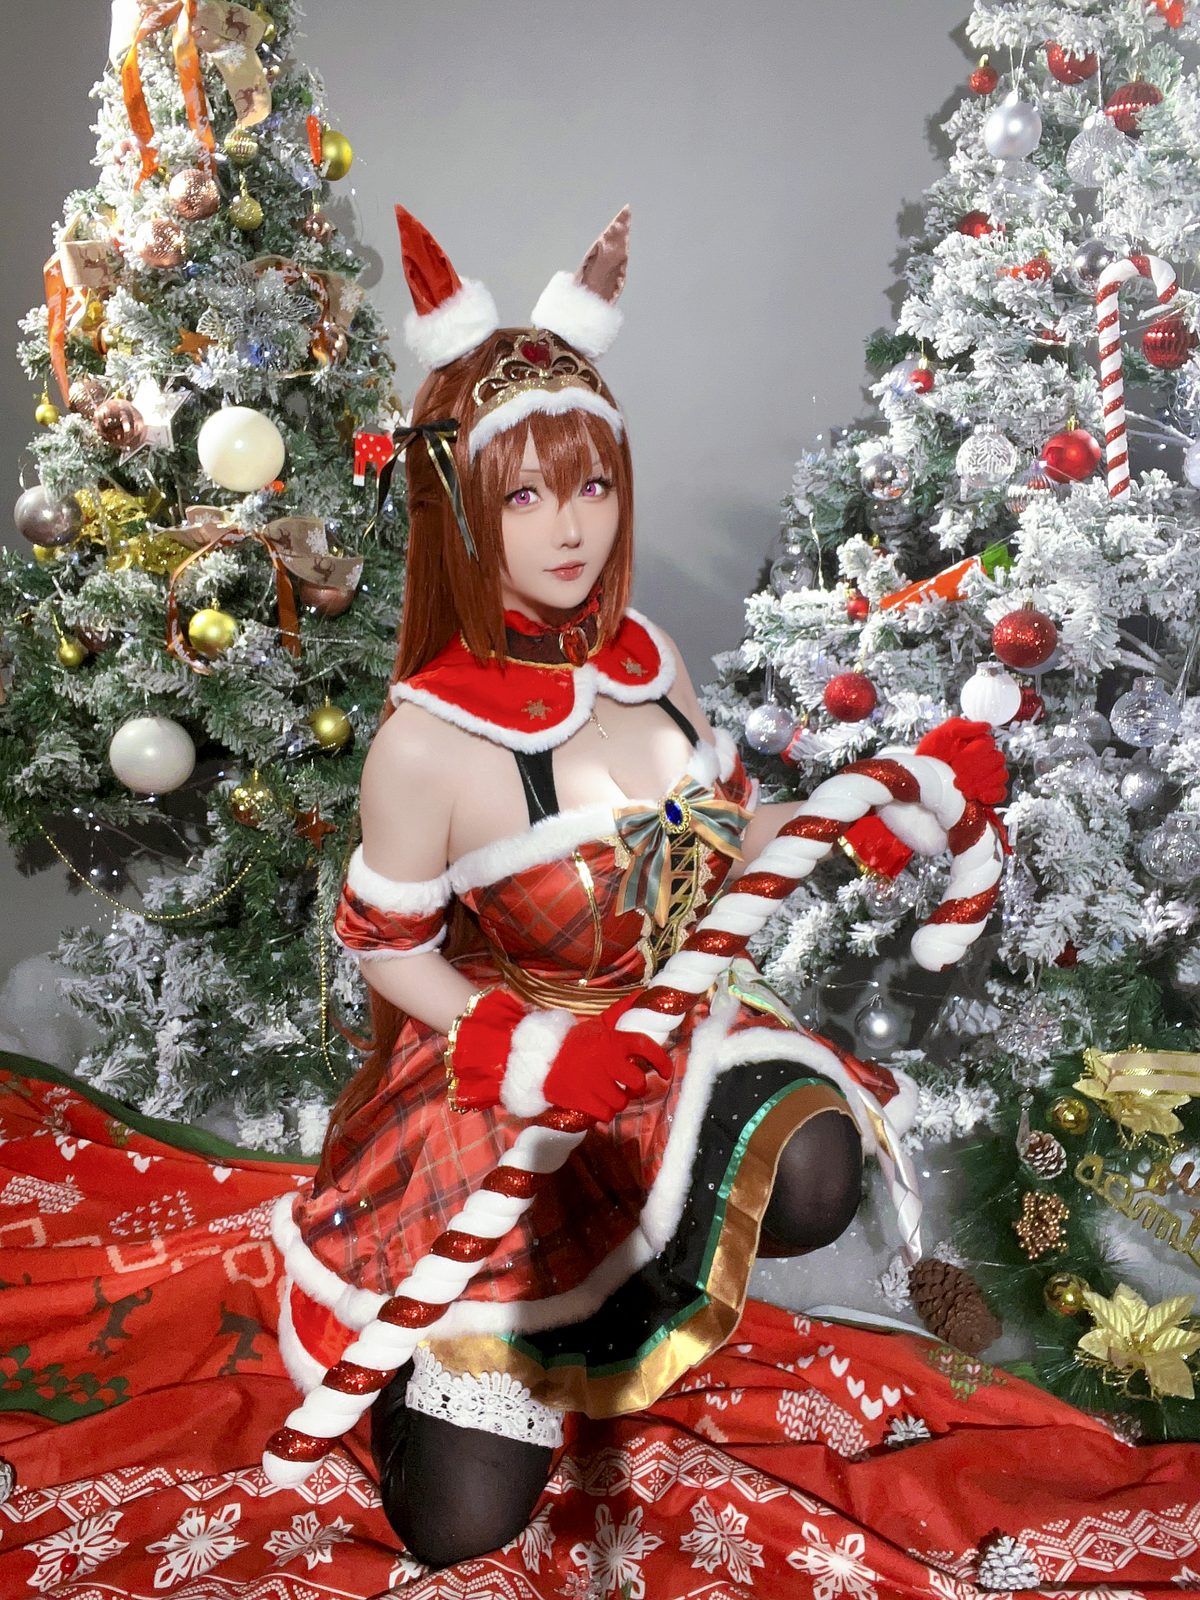 View - Coser@- StarHoshilily - 2023年12月计划A 赛马娘 大和赤骥 圣诞衣装 - 